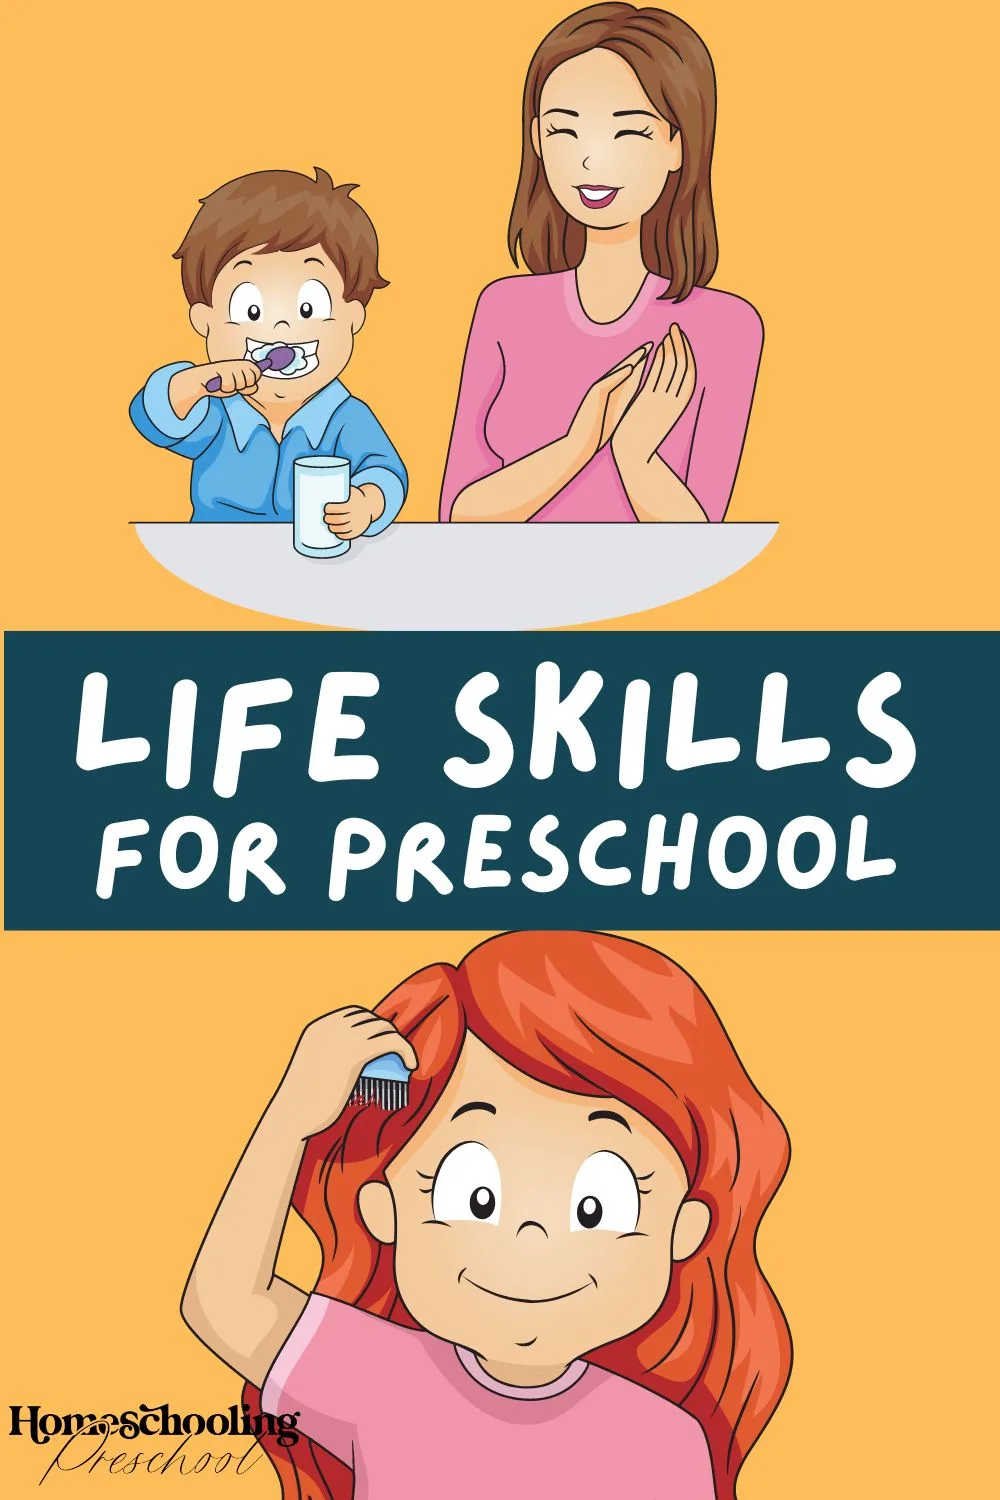 Life Skills for Preschool